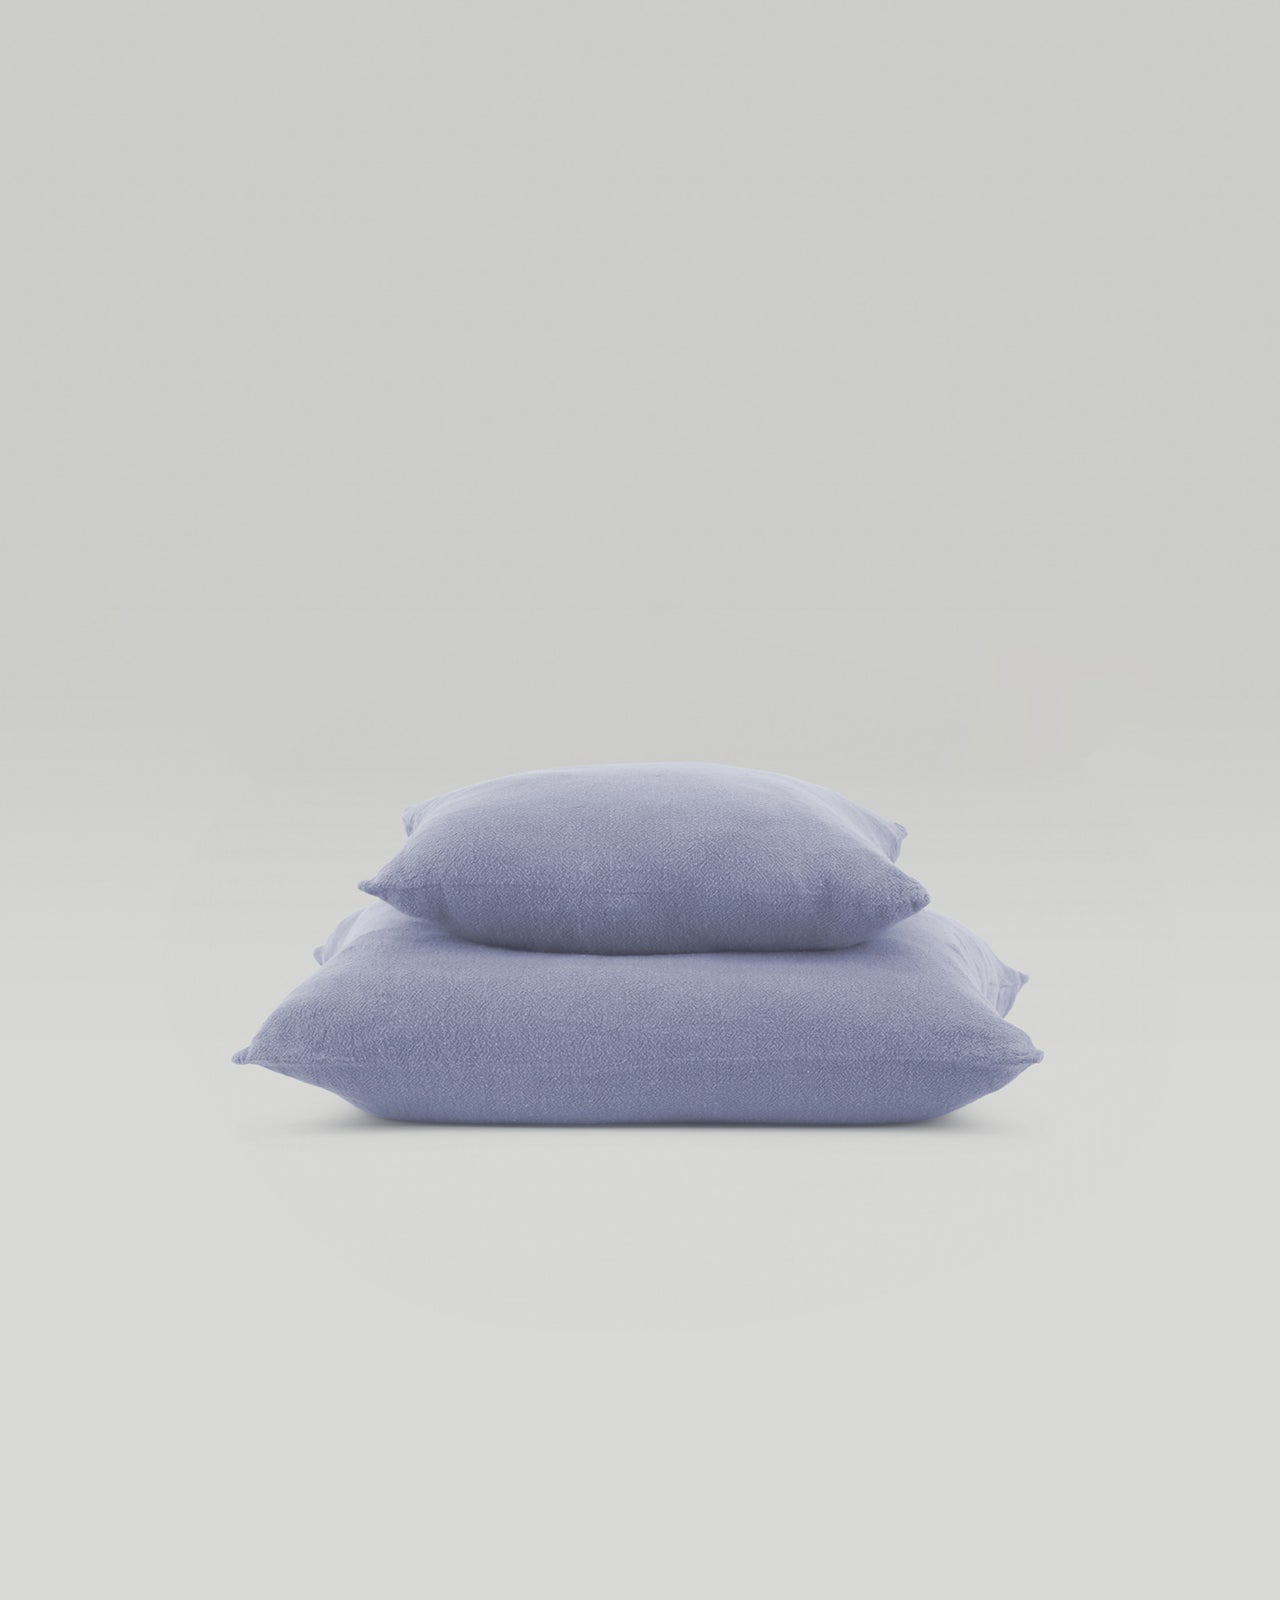 The raw linen cushion